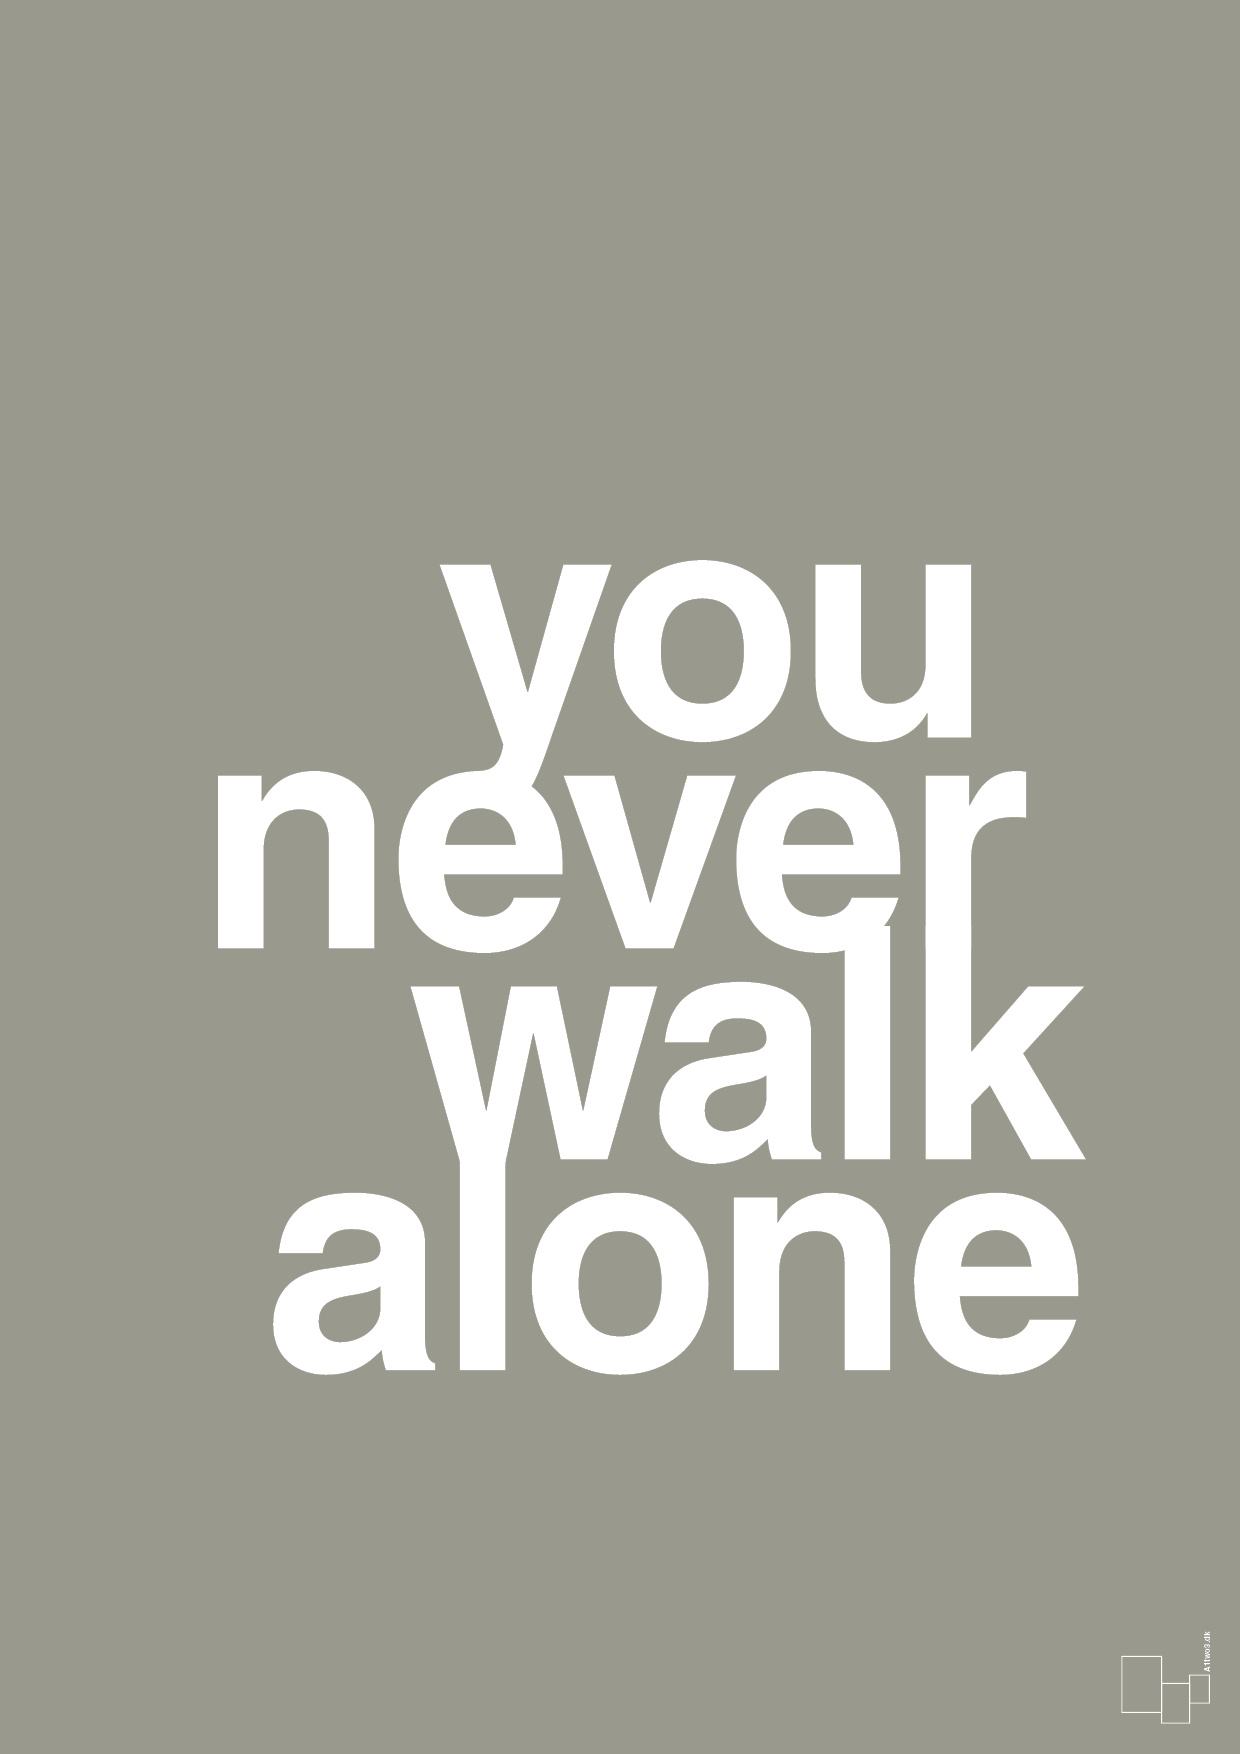 you never walk alone - Plakat med Ordsprog i Battleship Gray